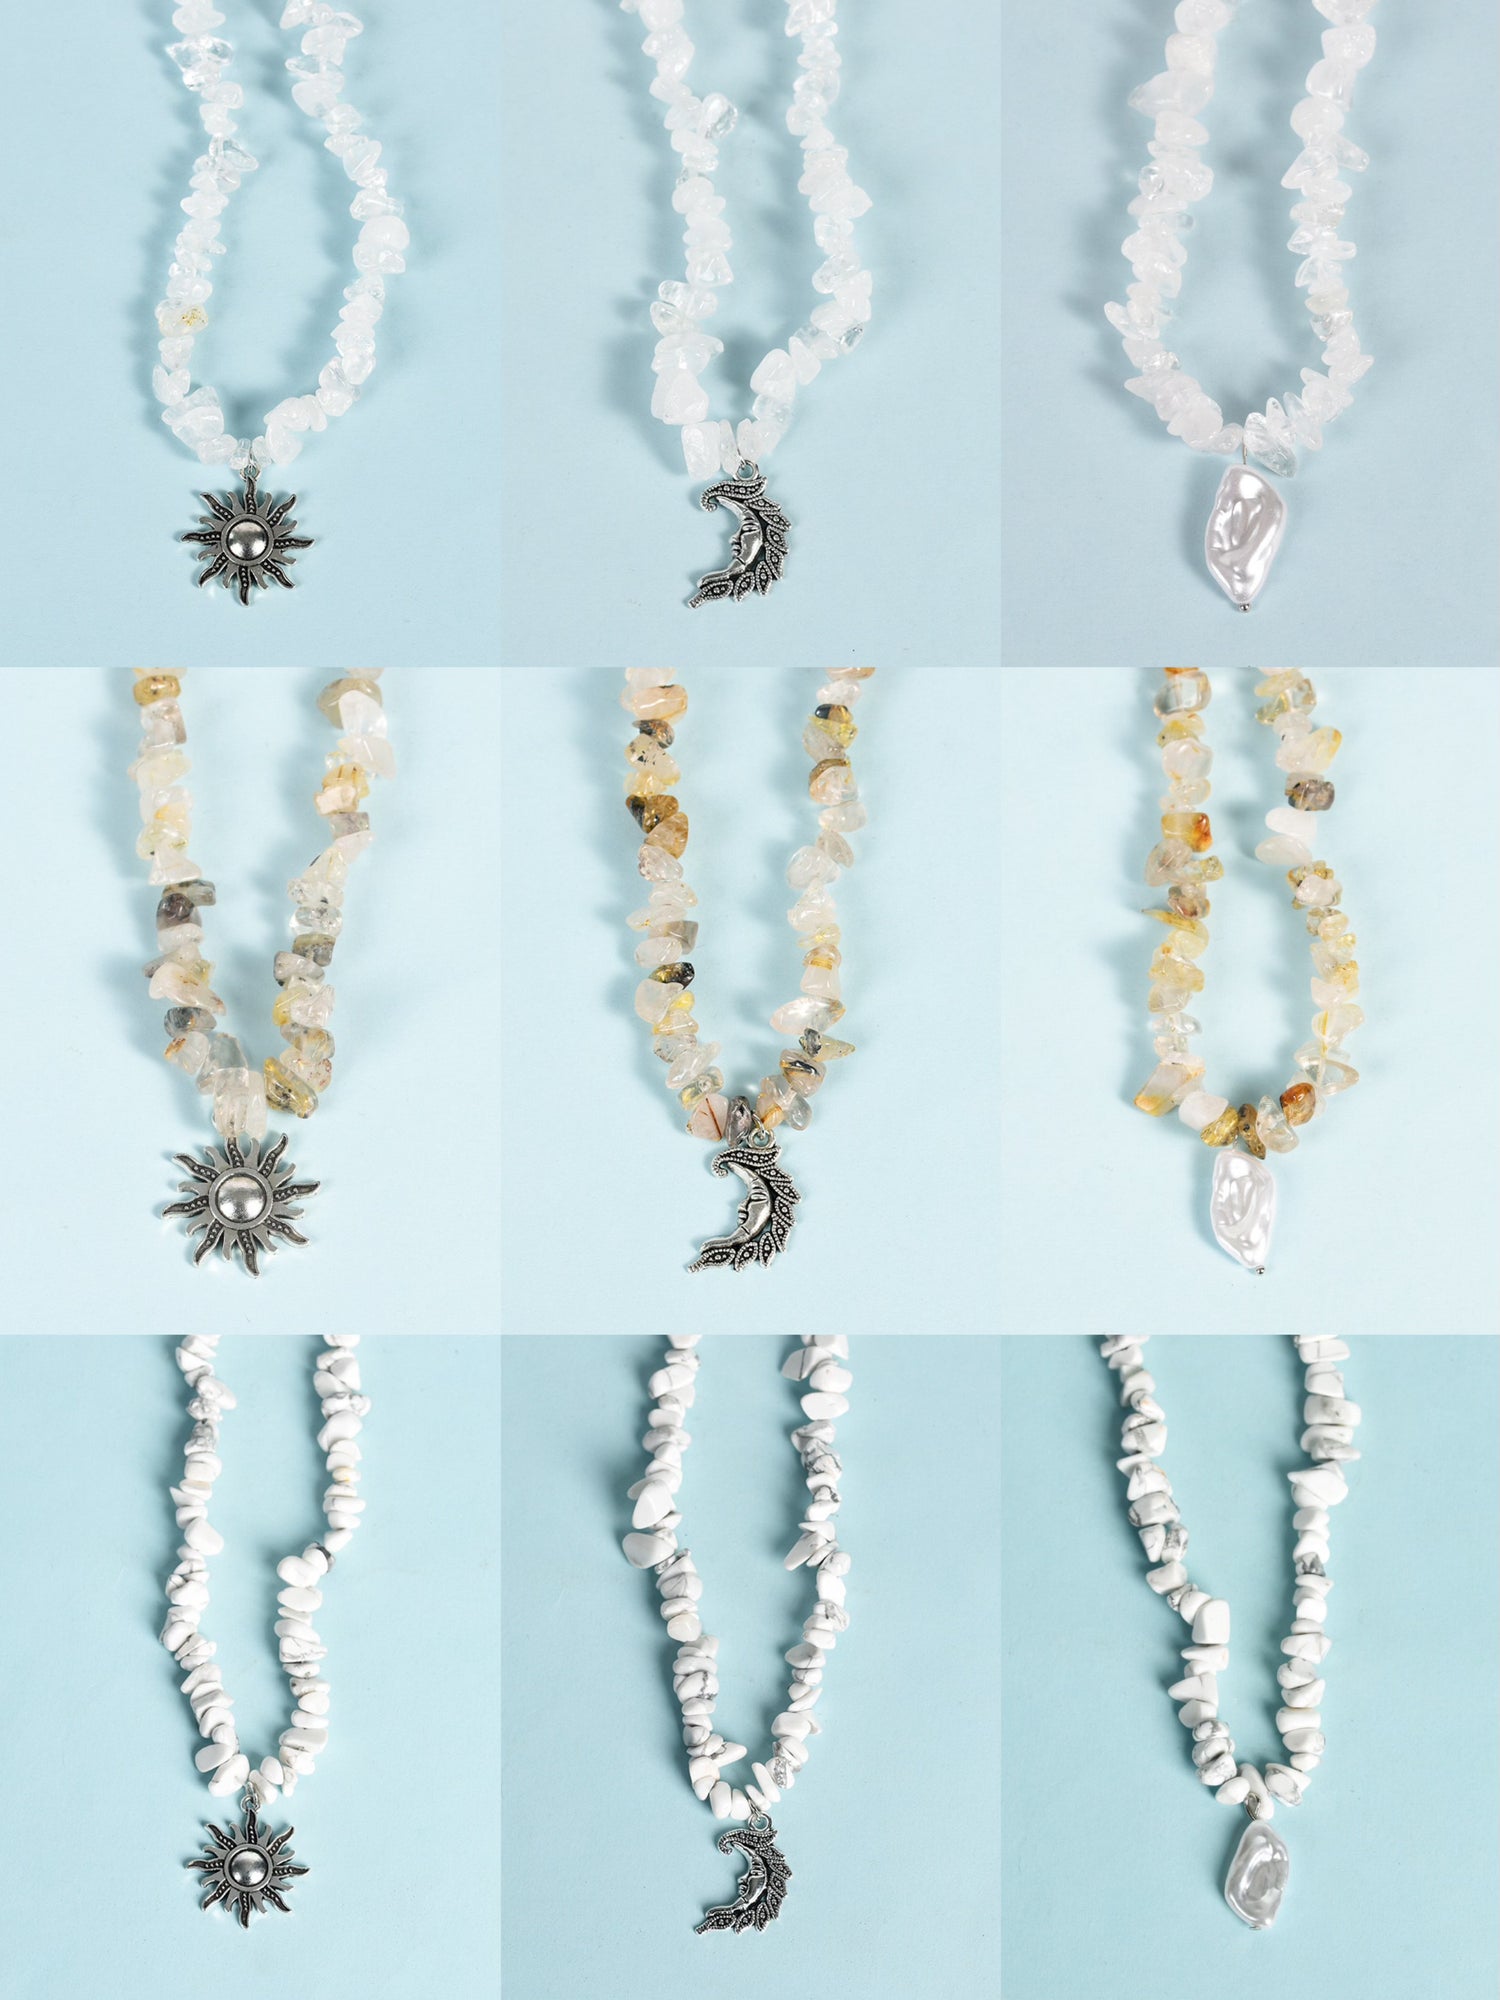 【Fancy-Crystal】Crystal jewelry Necklaces, Earrings